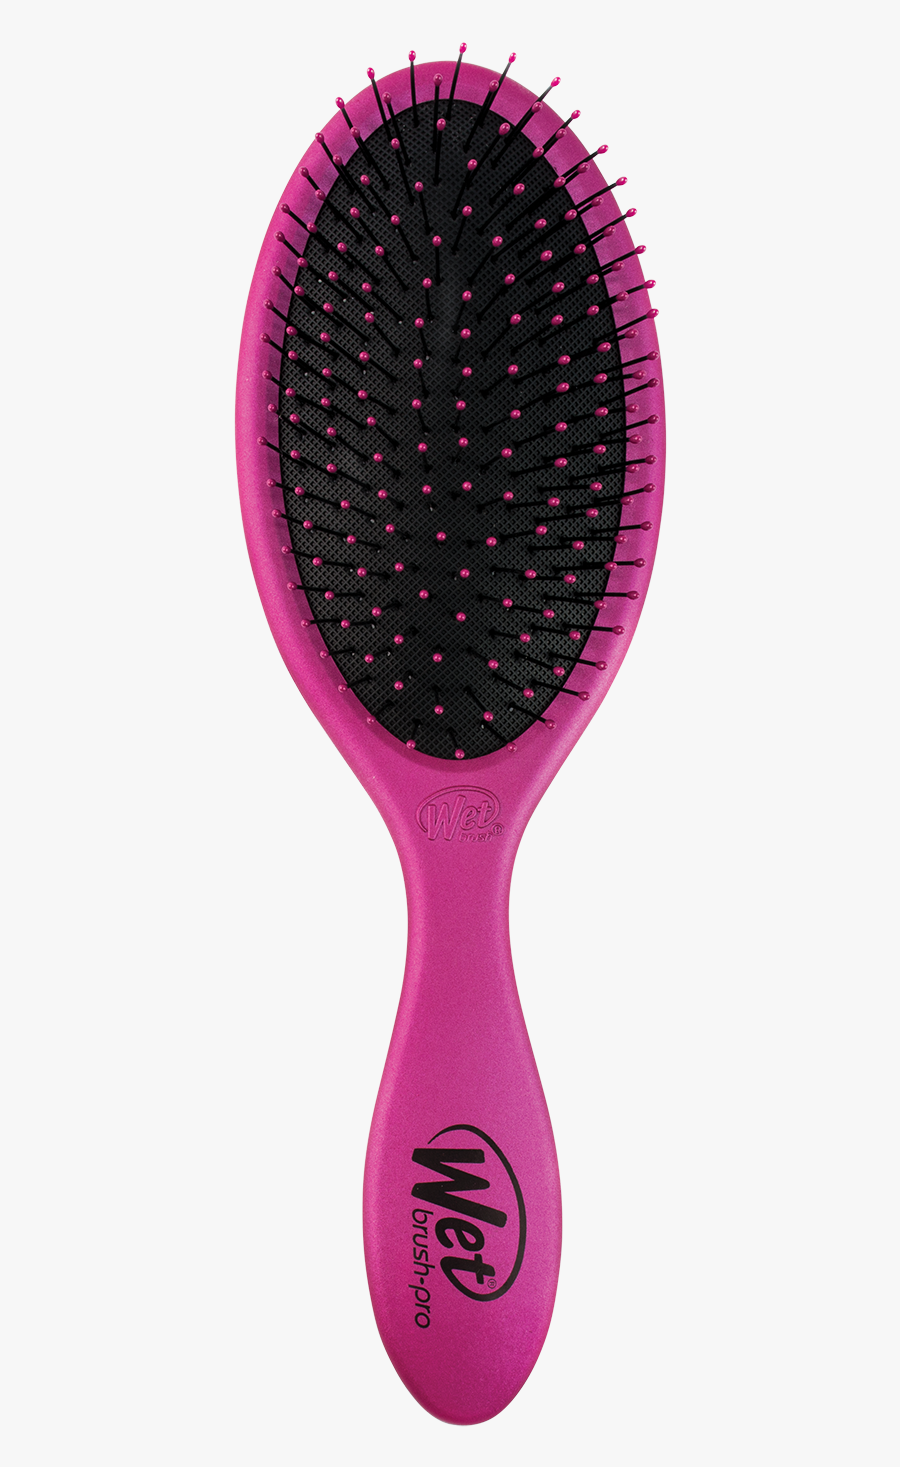 Hairbrush Png - Wet Brush Transparent Background, Transparent Clipart